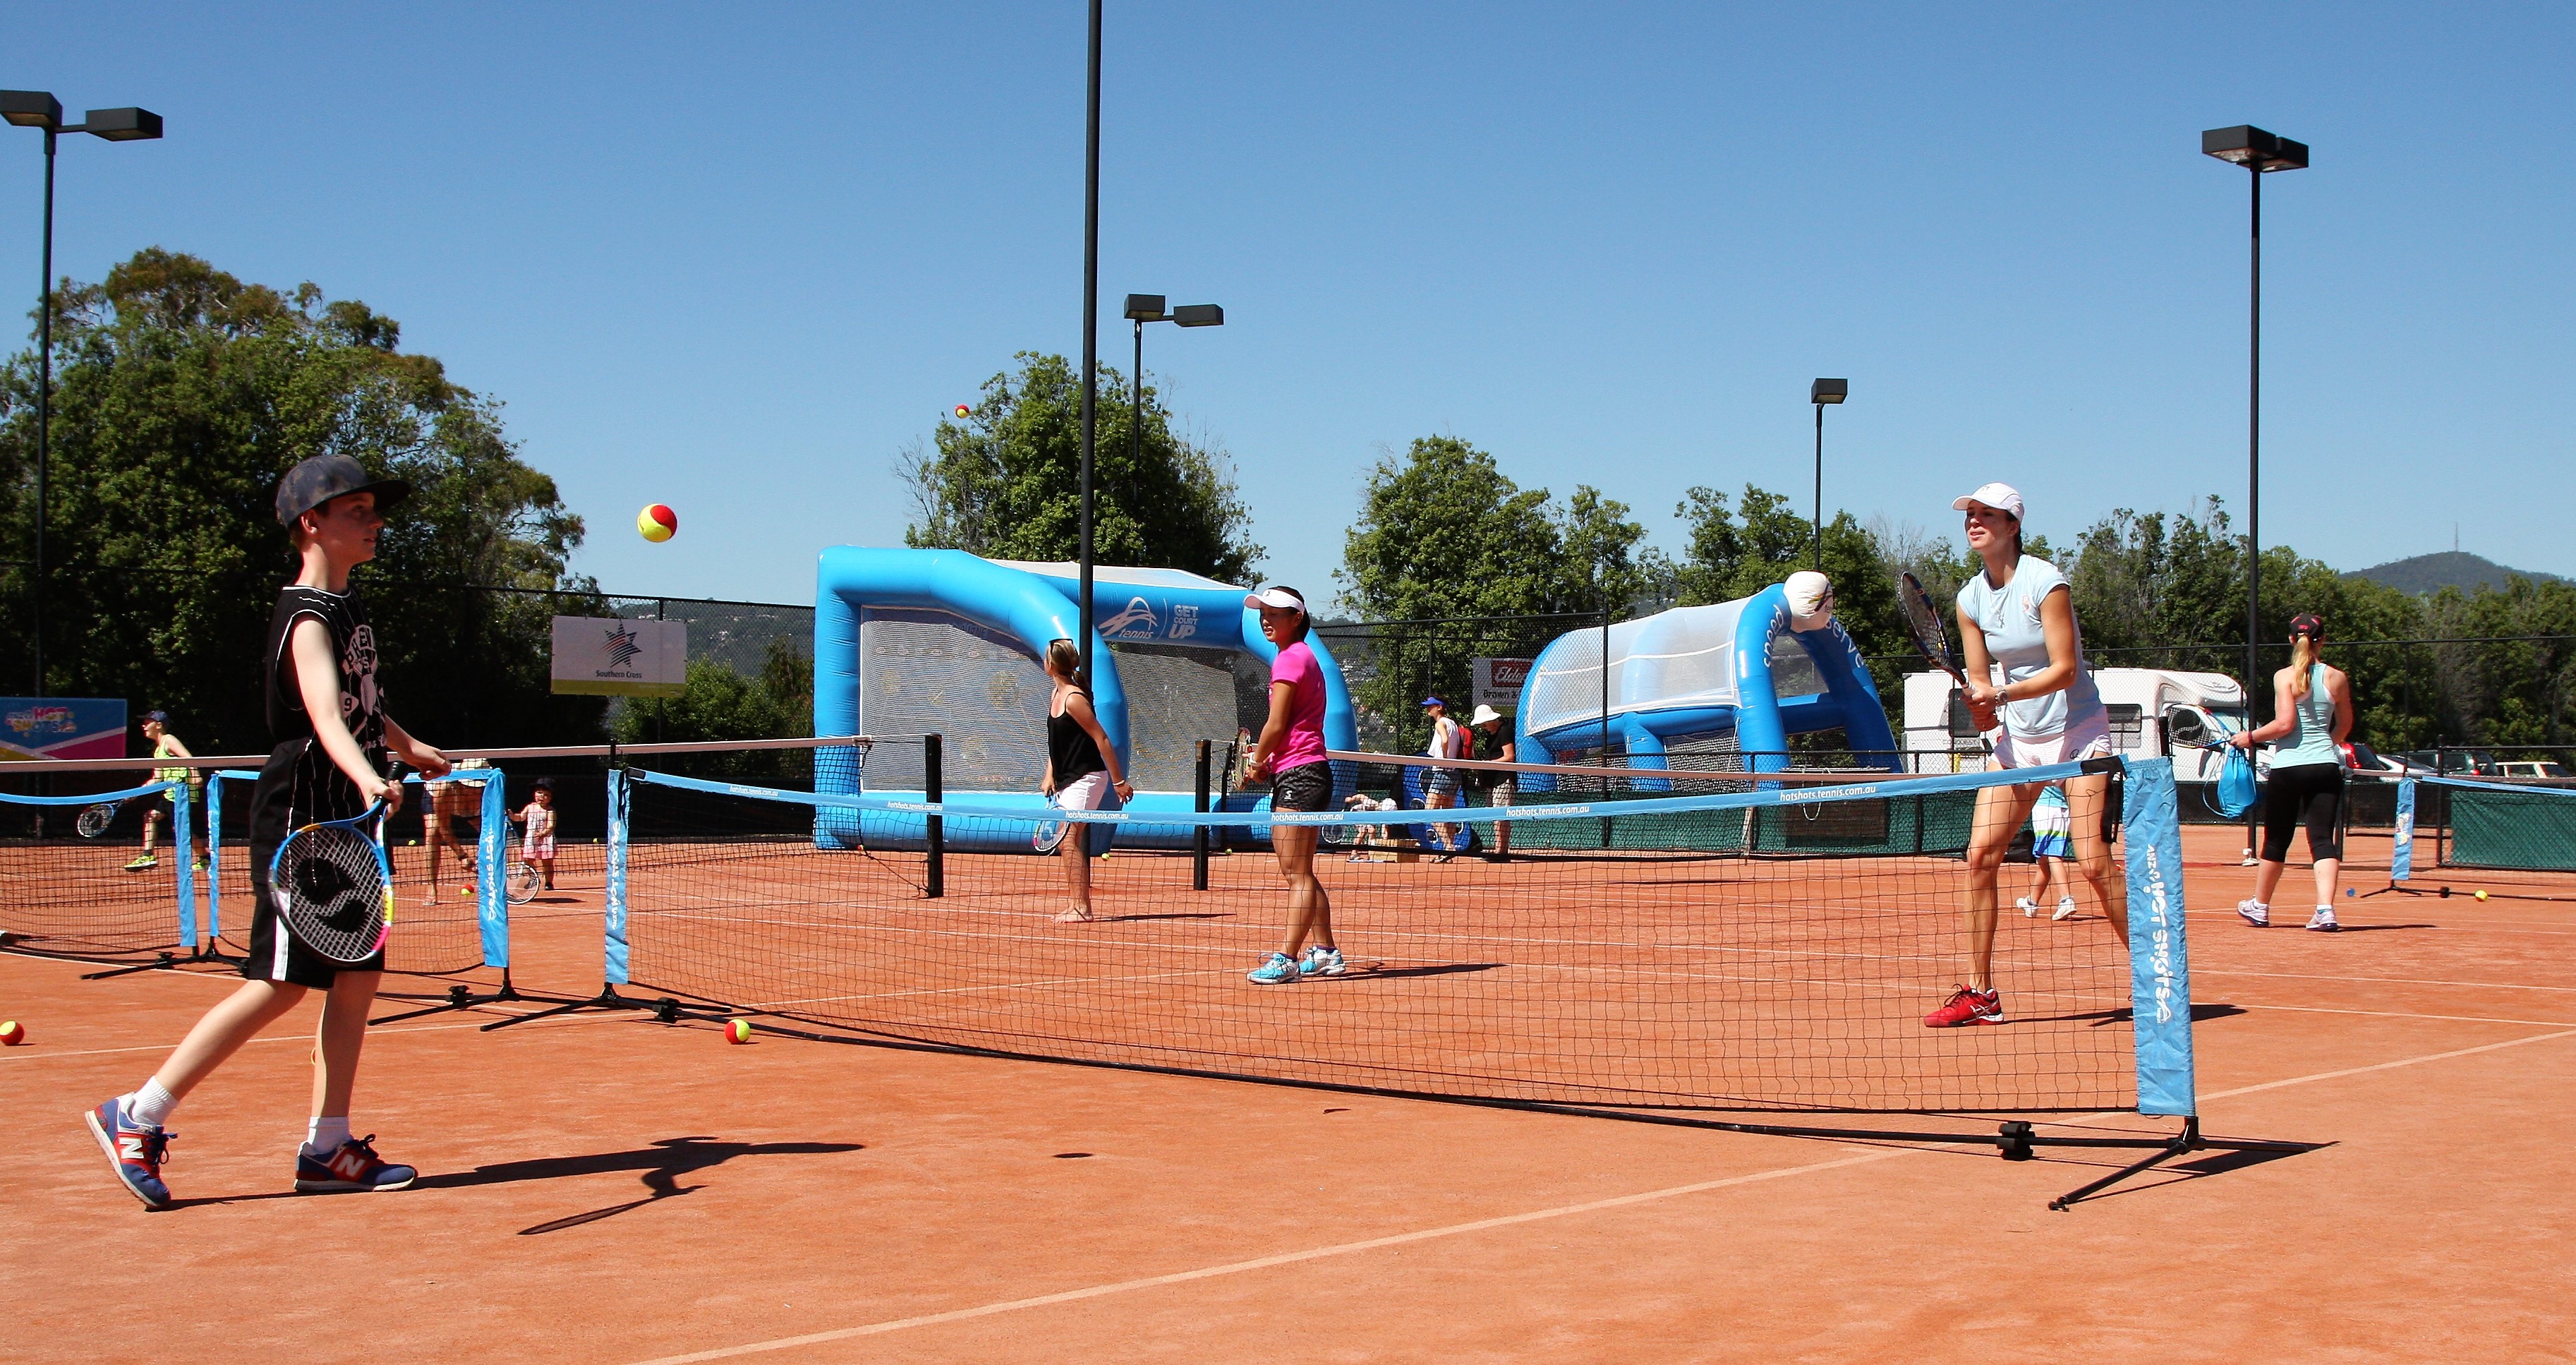 HAVING FUN: Misaki Doi and Galina Voskoboeva joined in the Kids Tennis Day action.